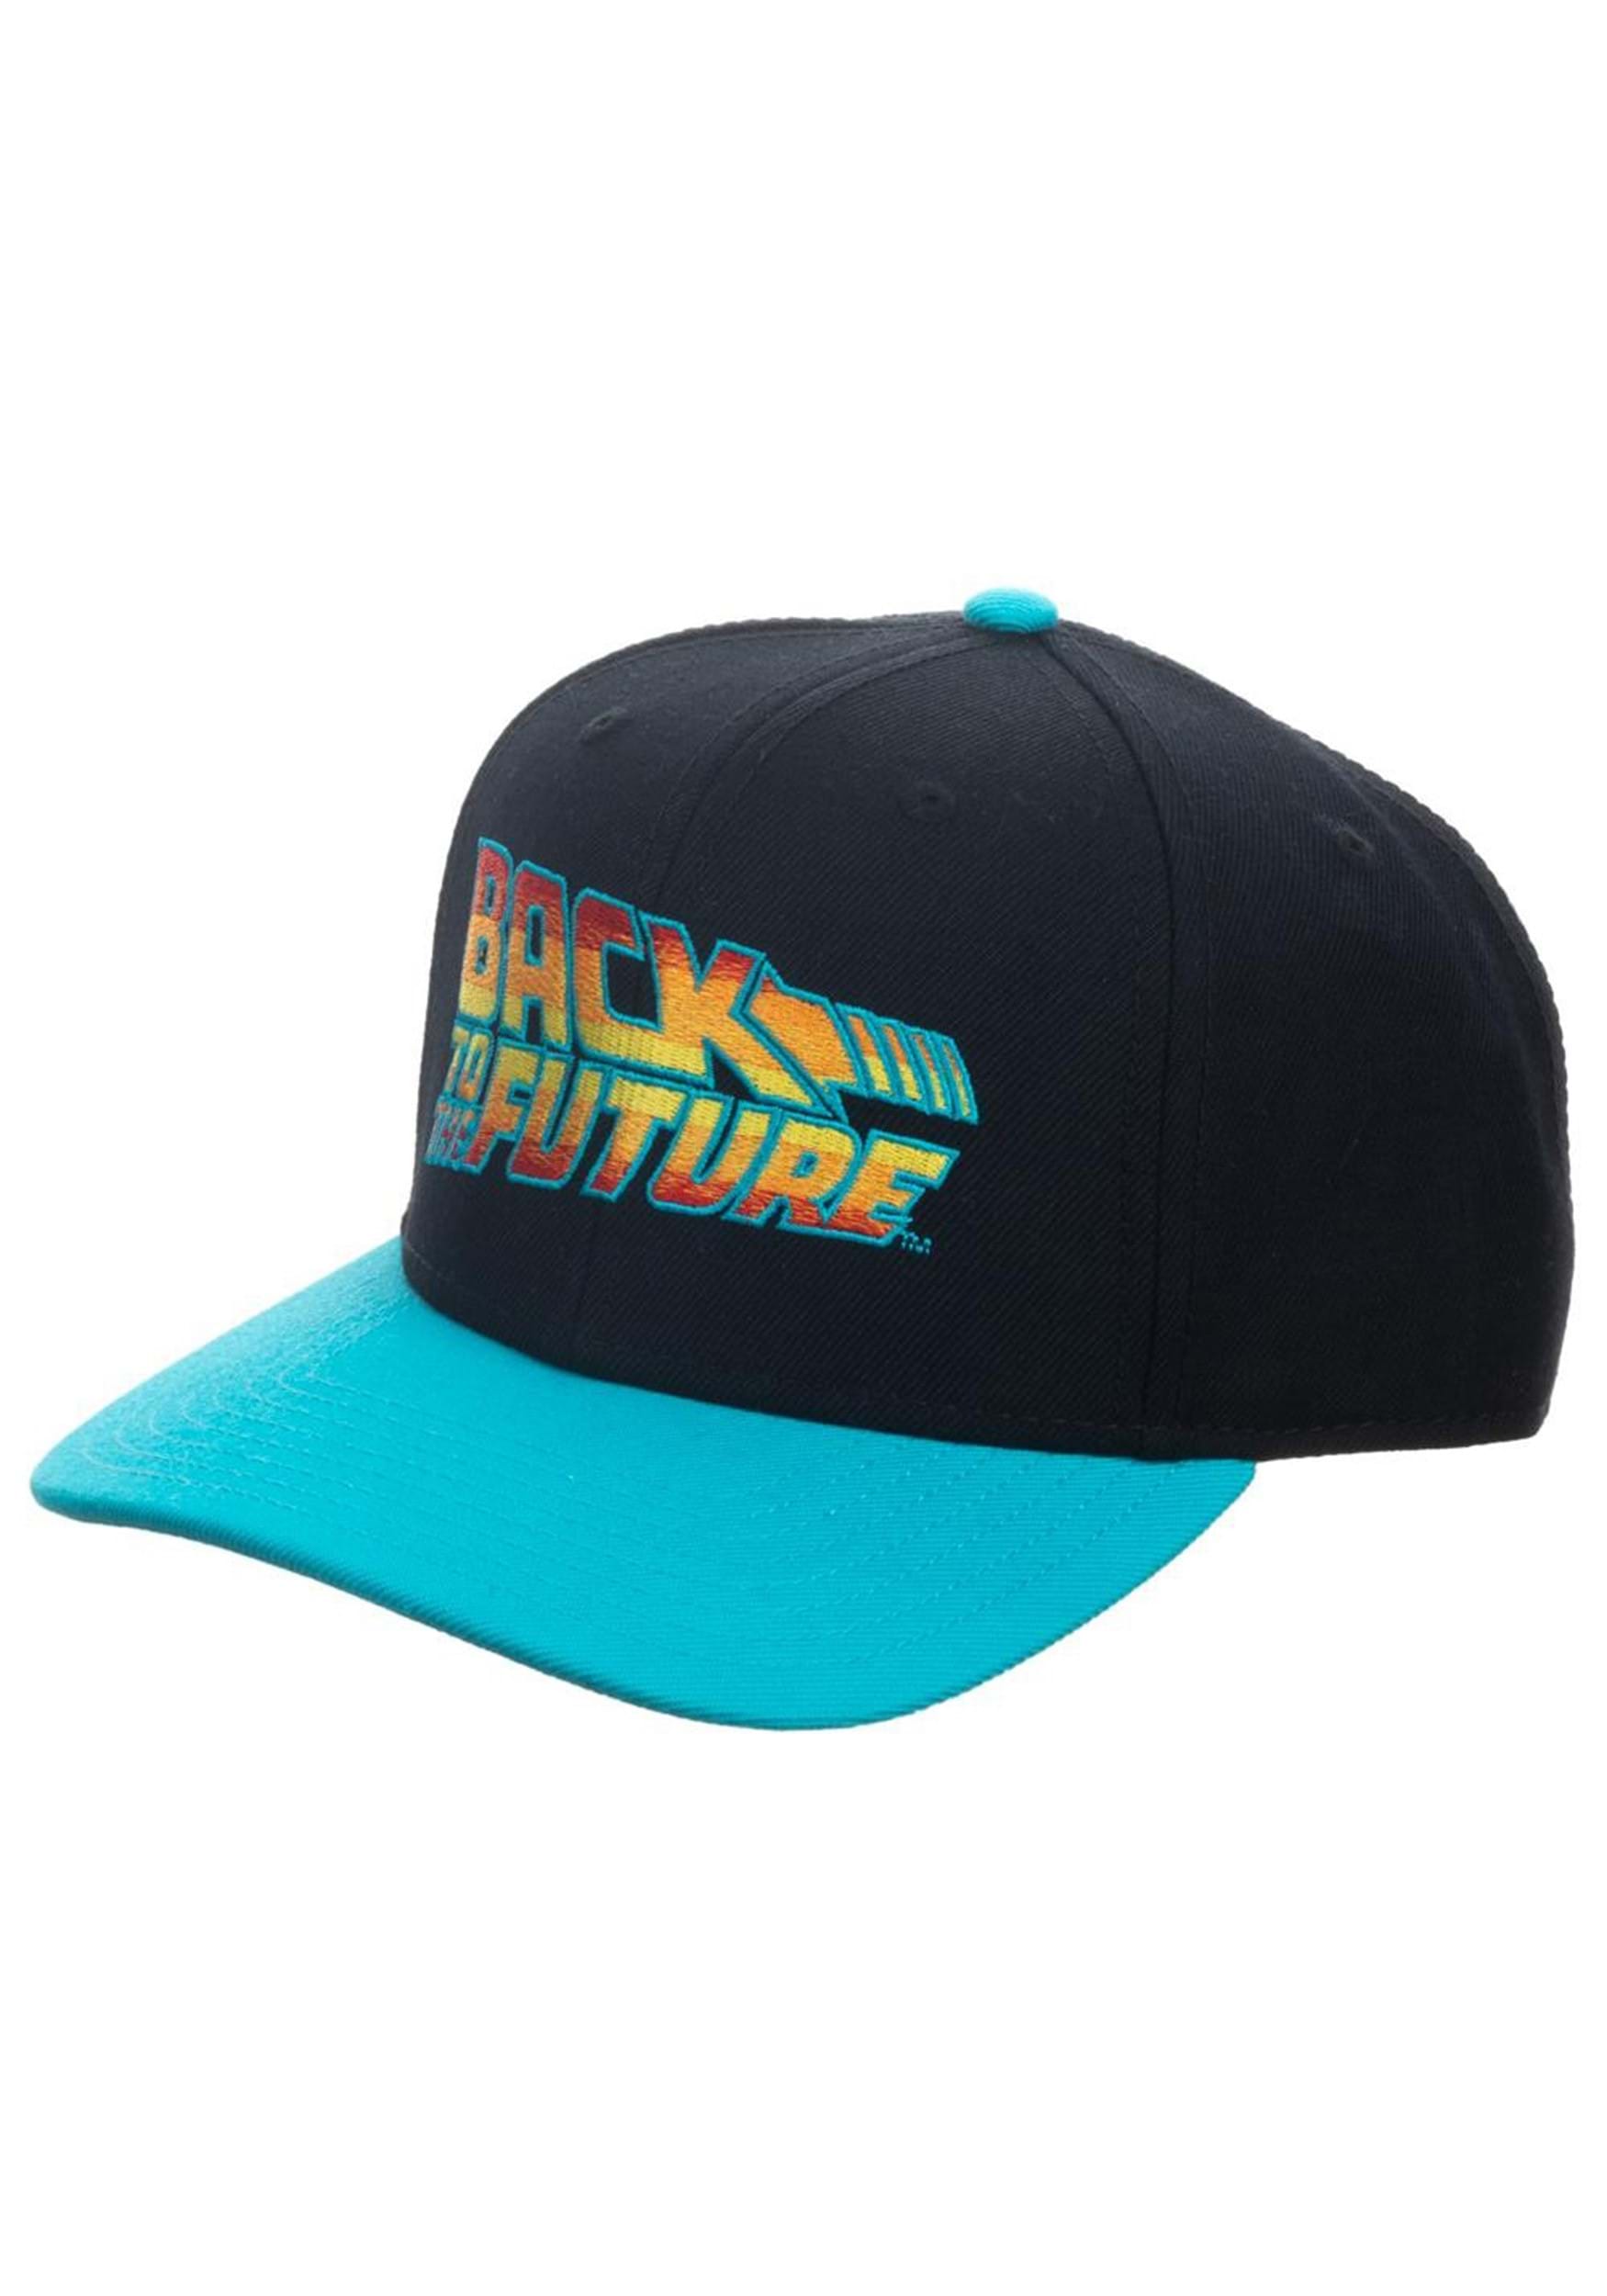 Back to the Future | Flat Bill Snapback